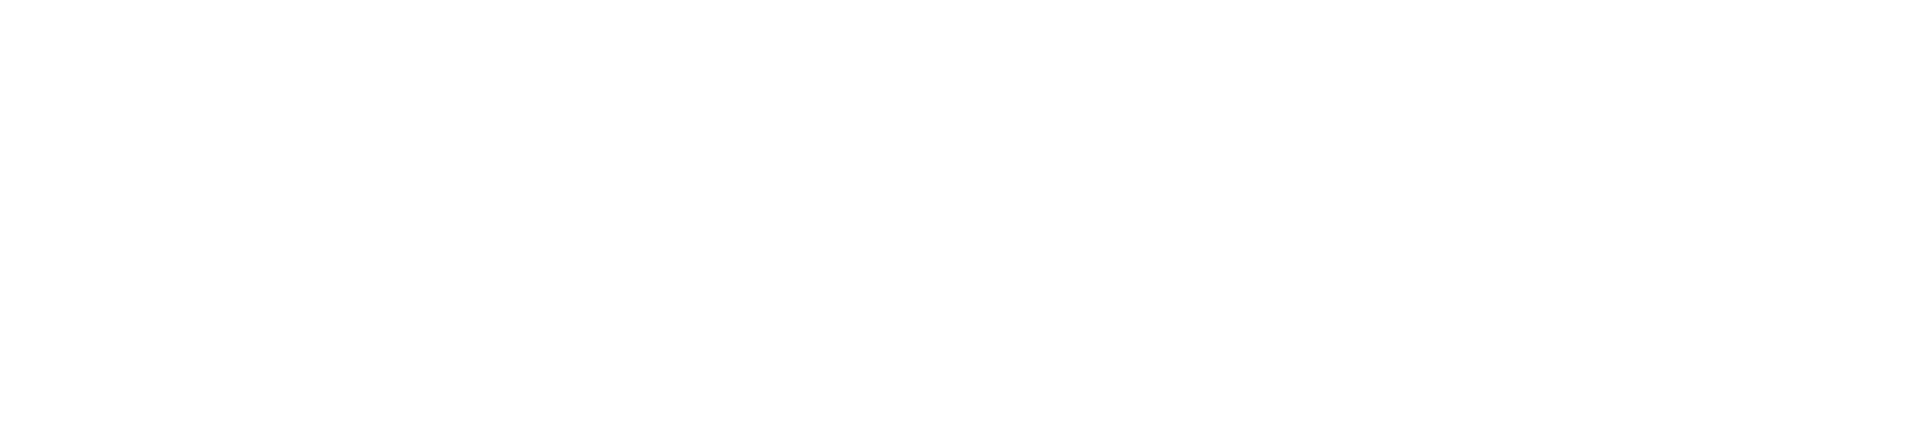 YouTube_Logo-2017